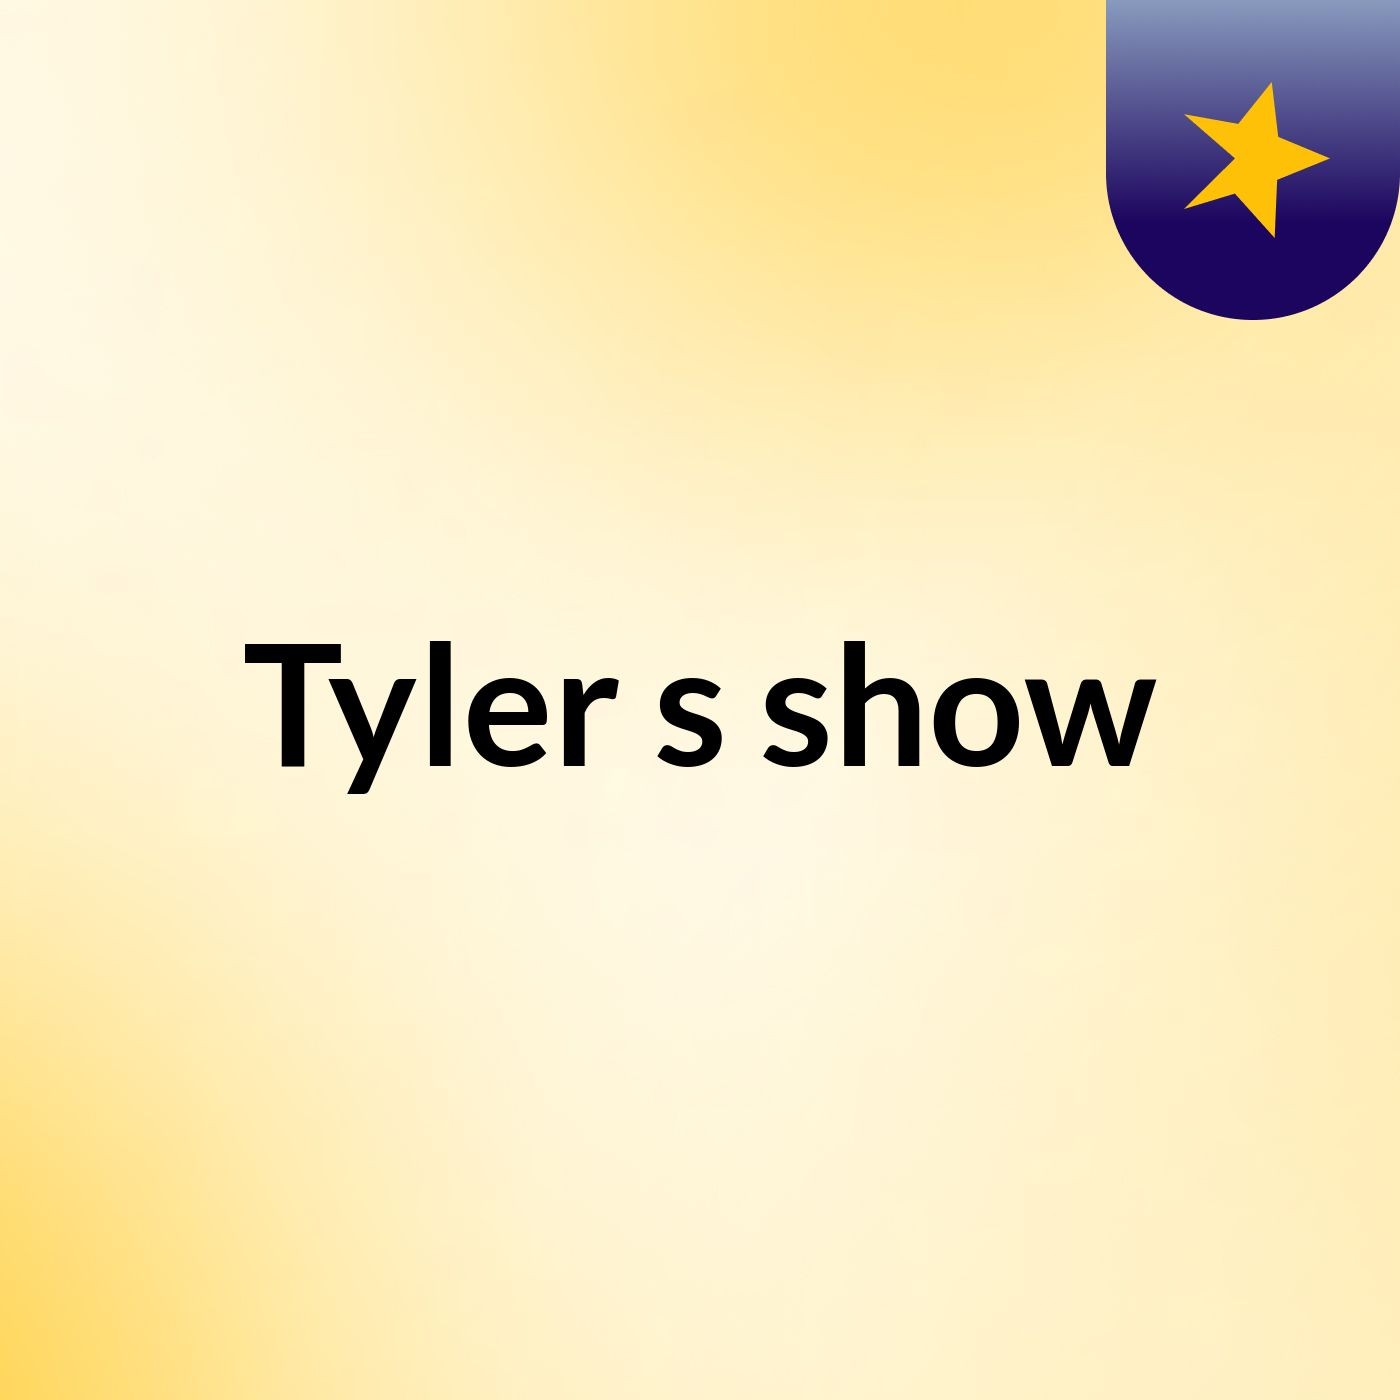 Tyler's show